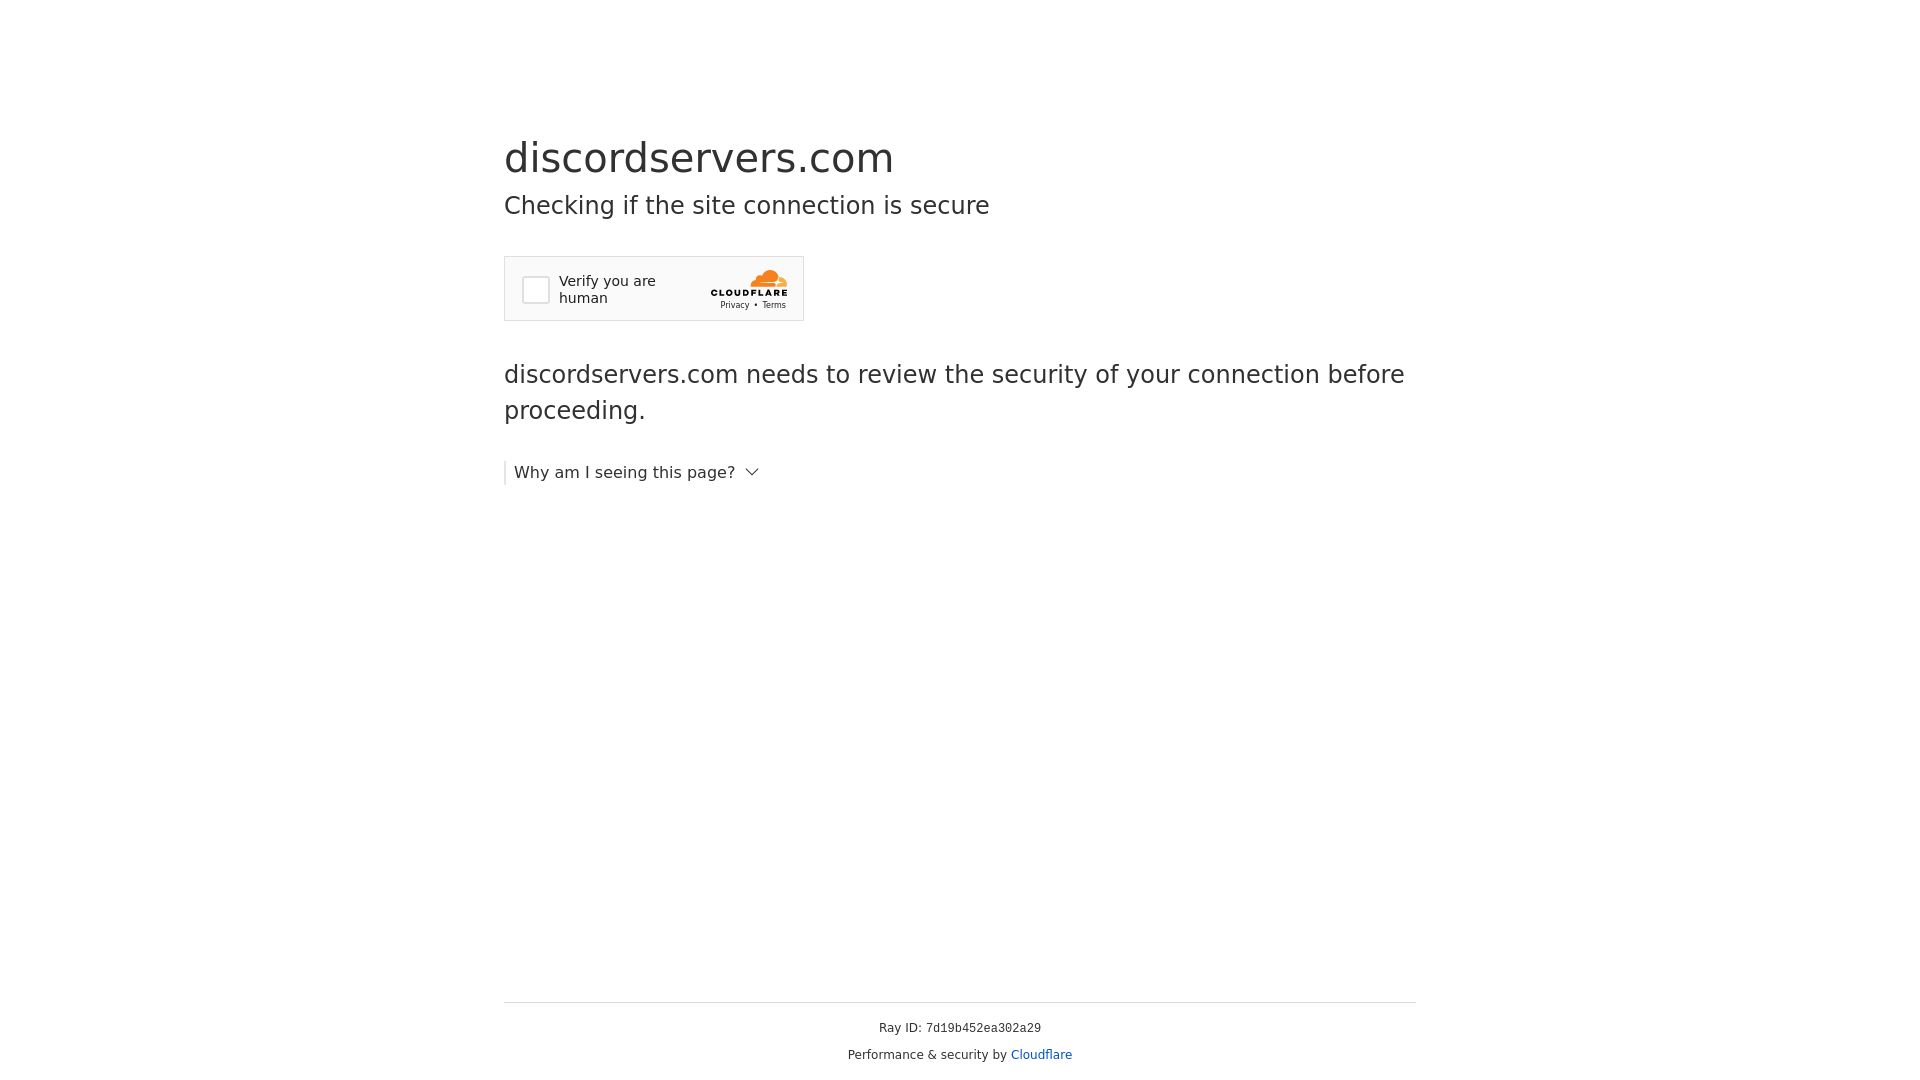 вебсайт discordservers.com Є   ONLINE